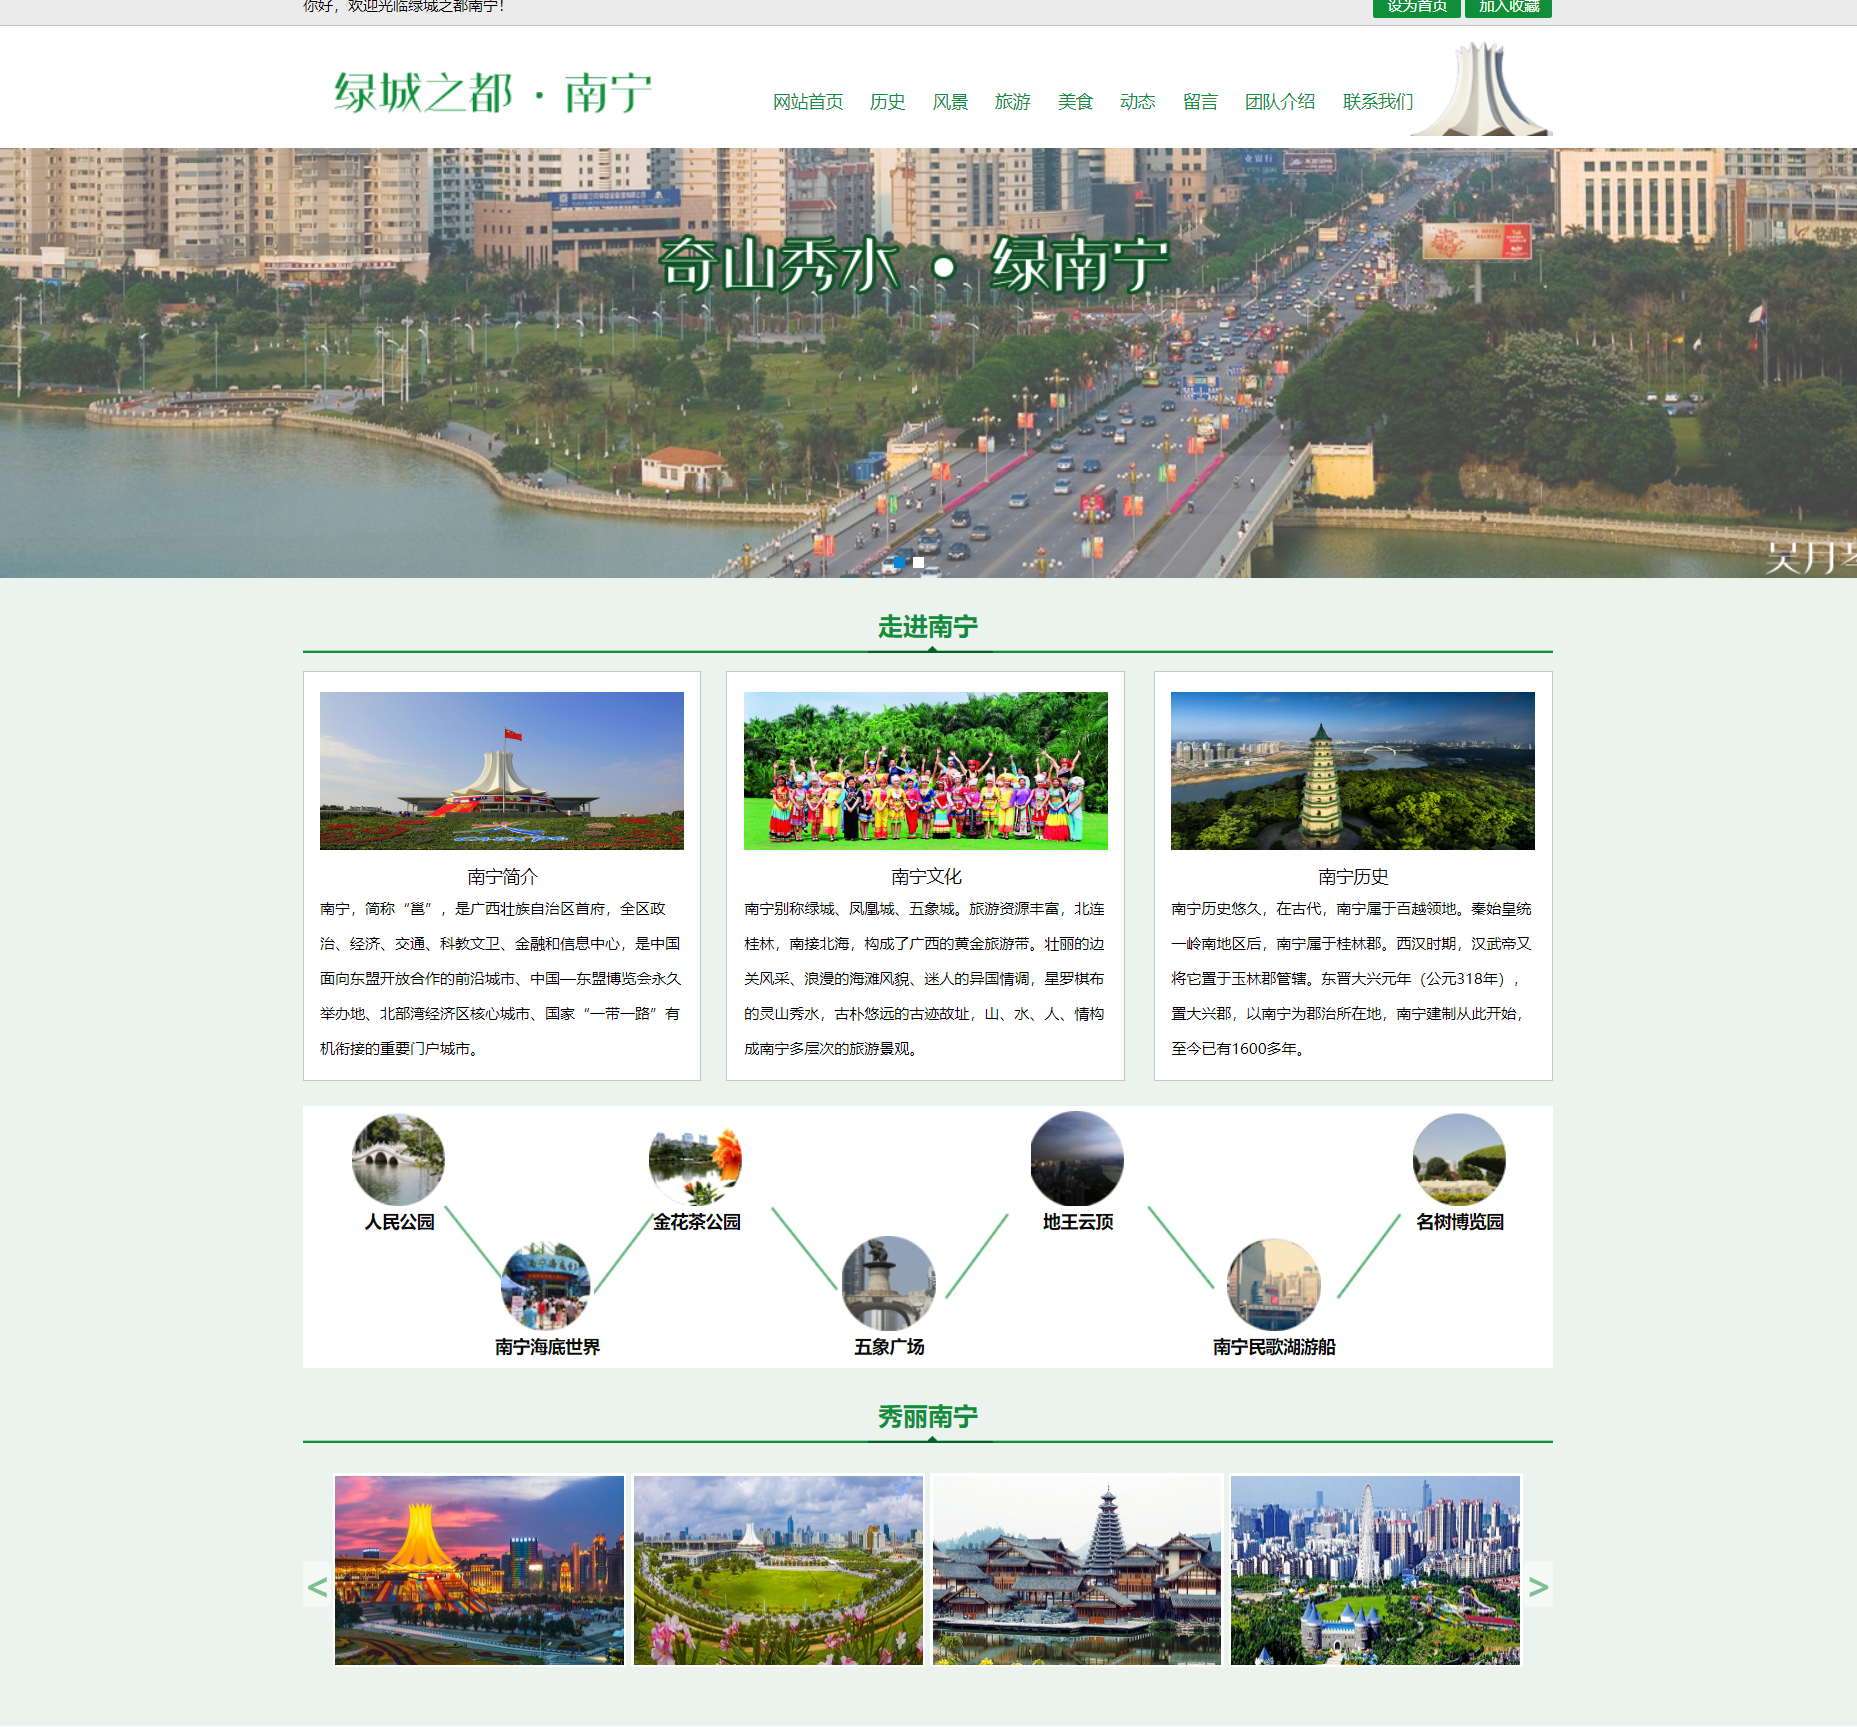 HTML绿色实用形式旅游景区介绍企业网站模板代码